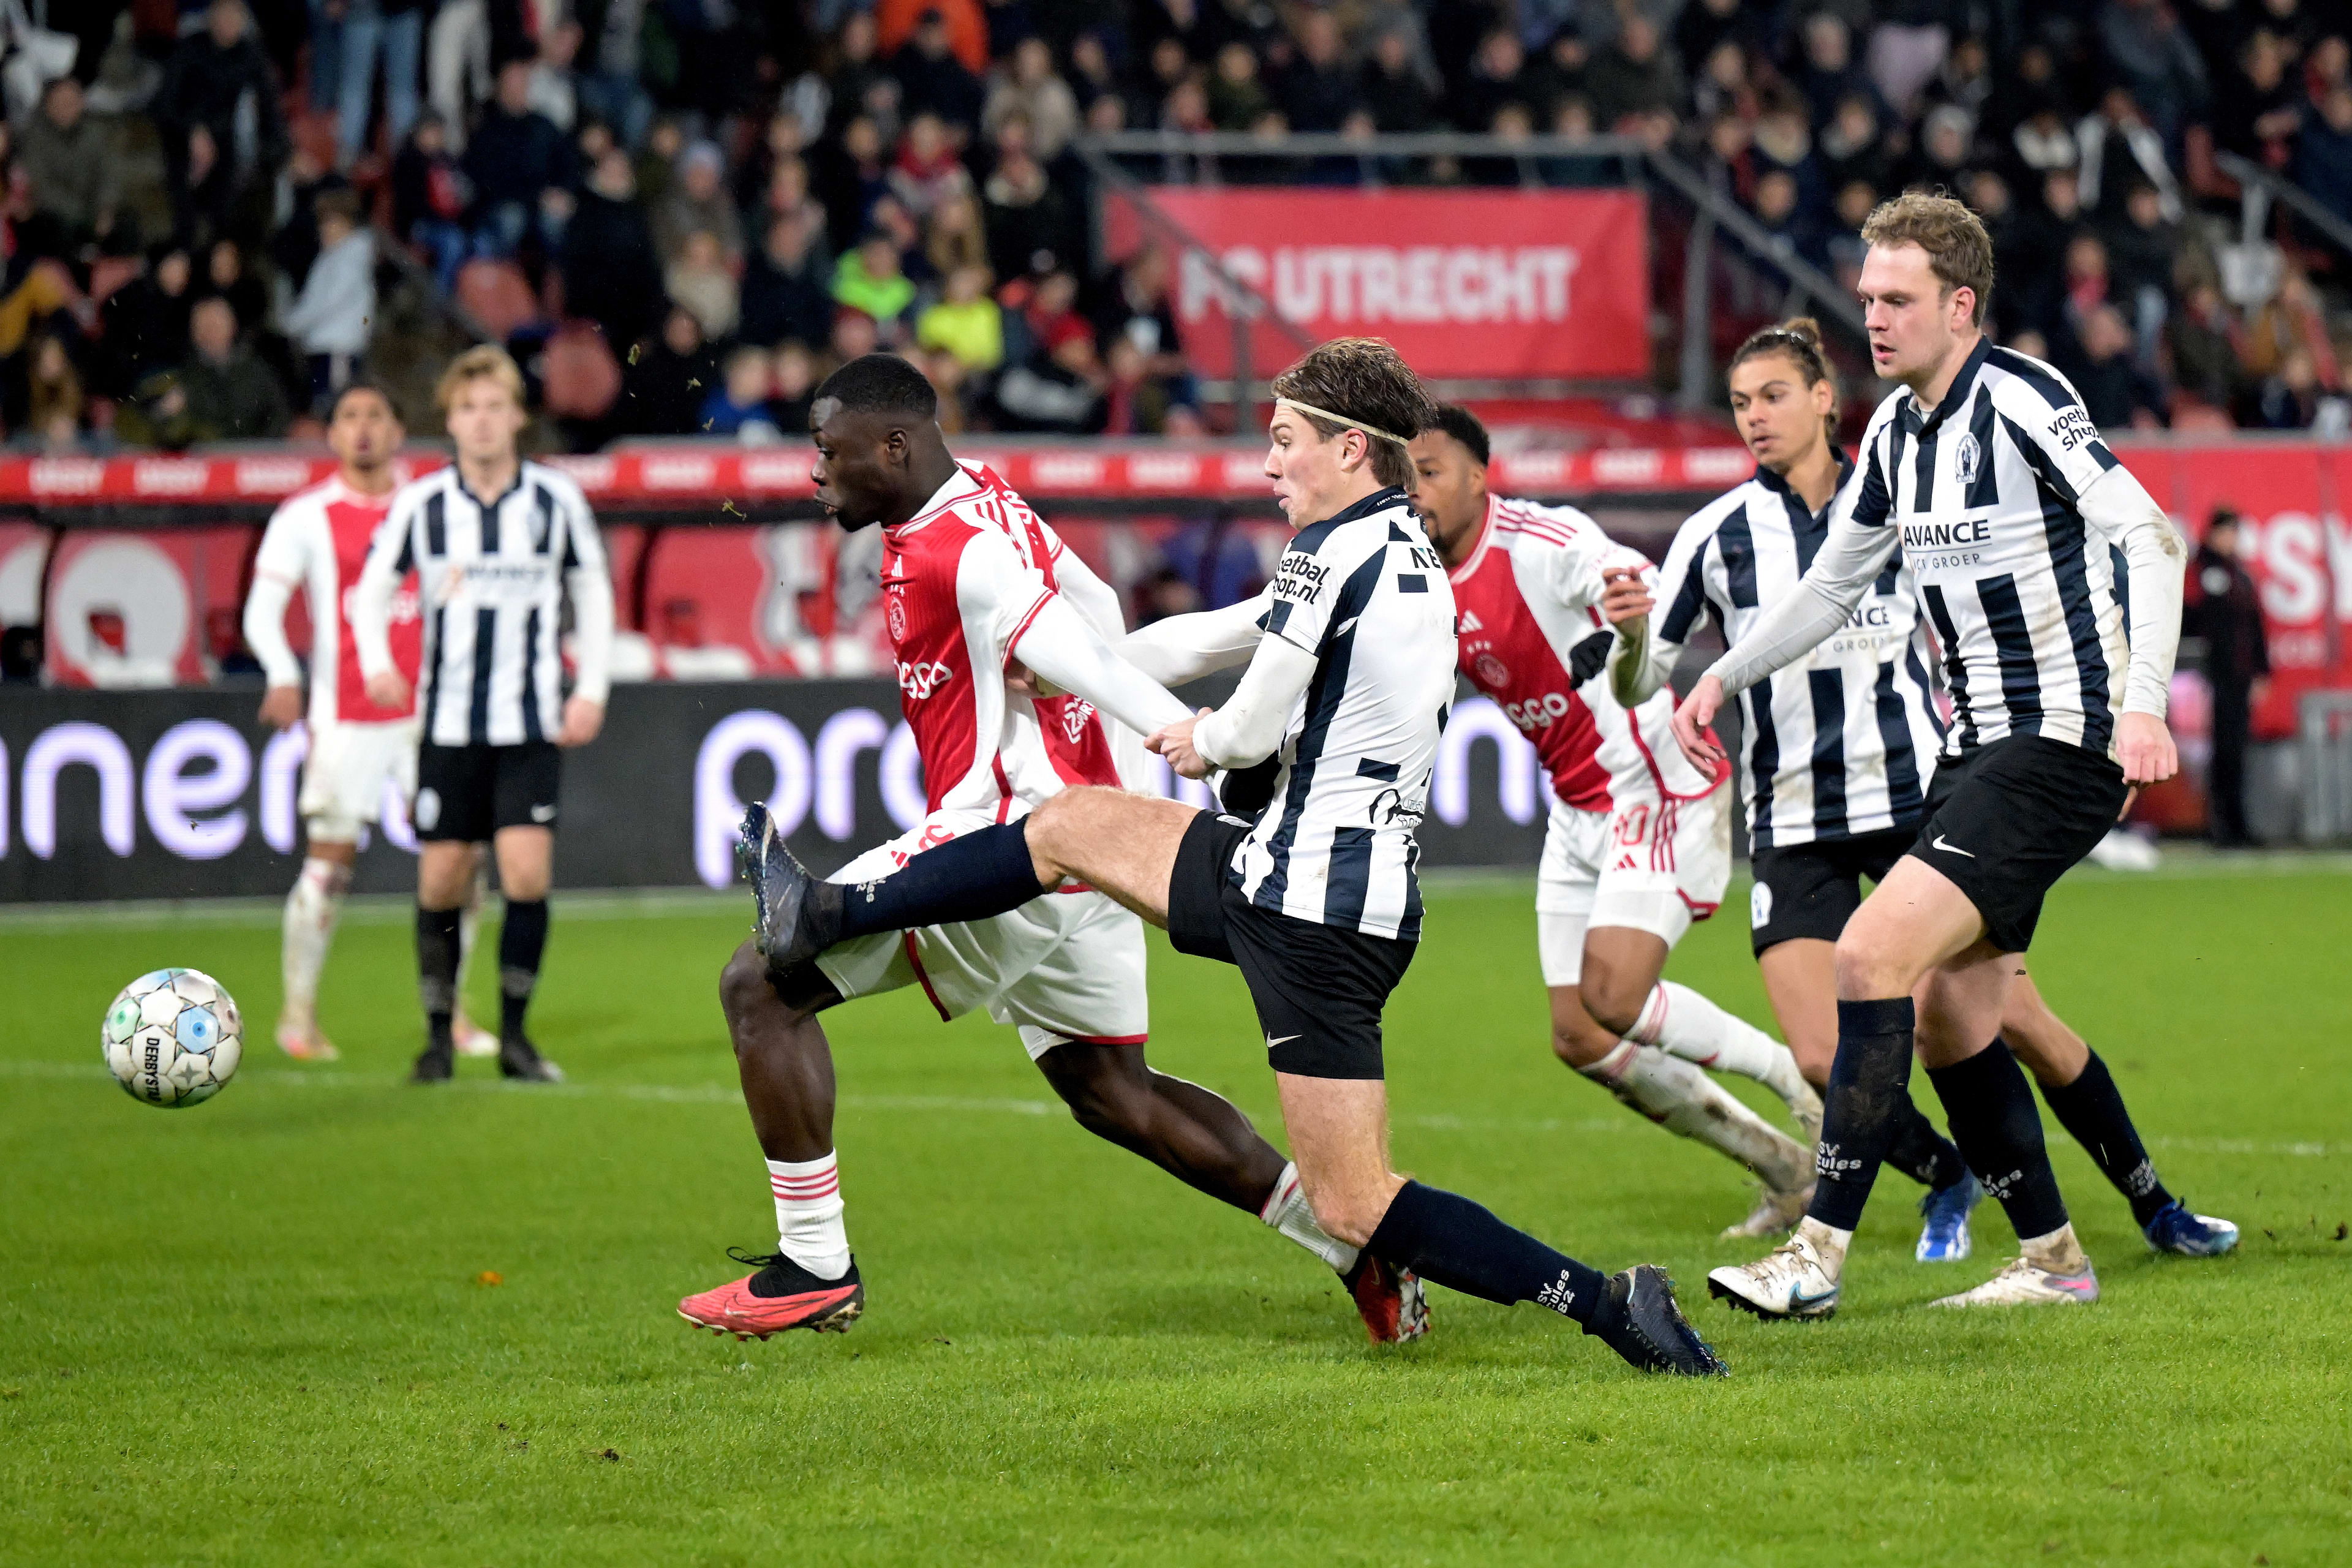 Grootste bekerstunt ooit: Hercules verslaat Ajax na hysterische finale